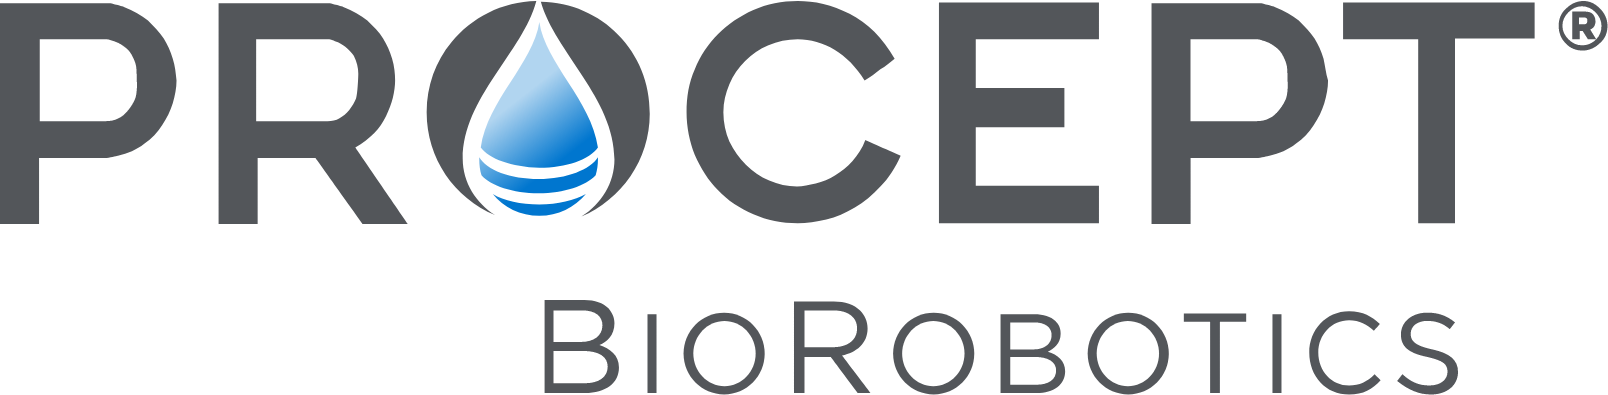 PROCEPT BioRobotics logo large (transparent PNG)